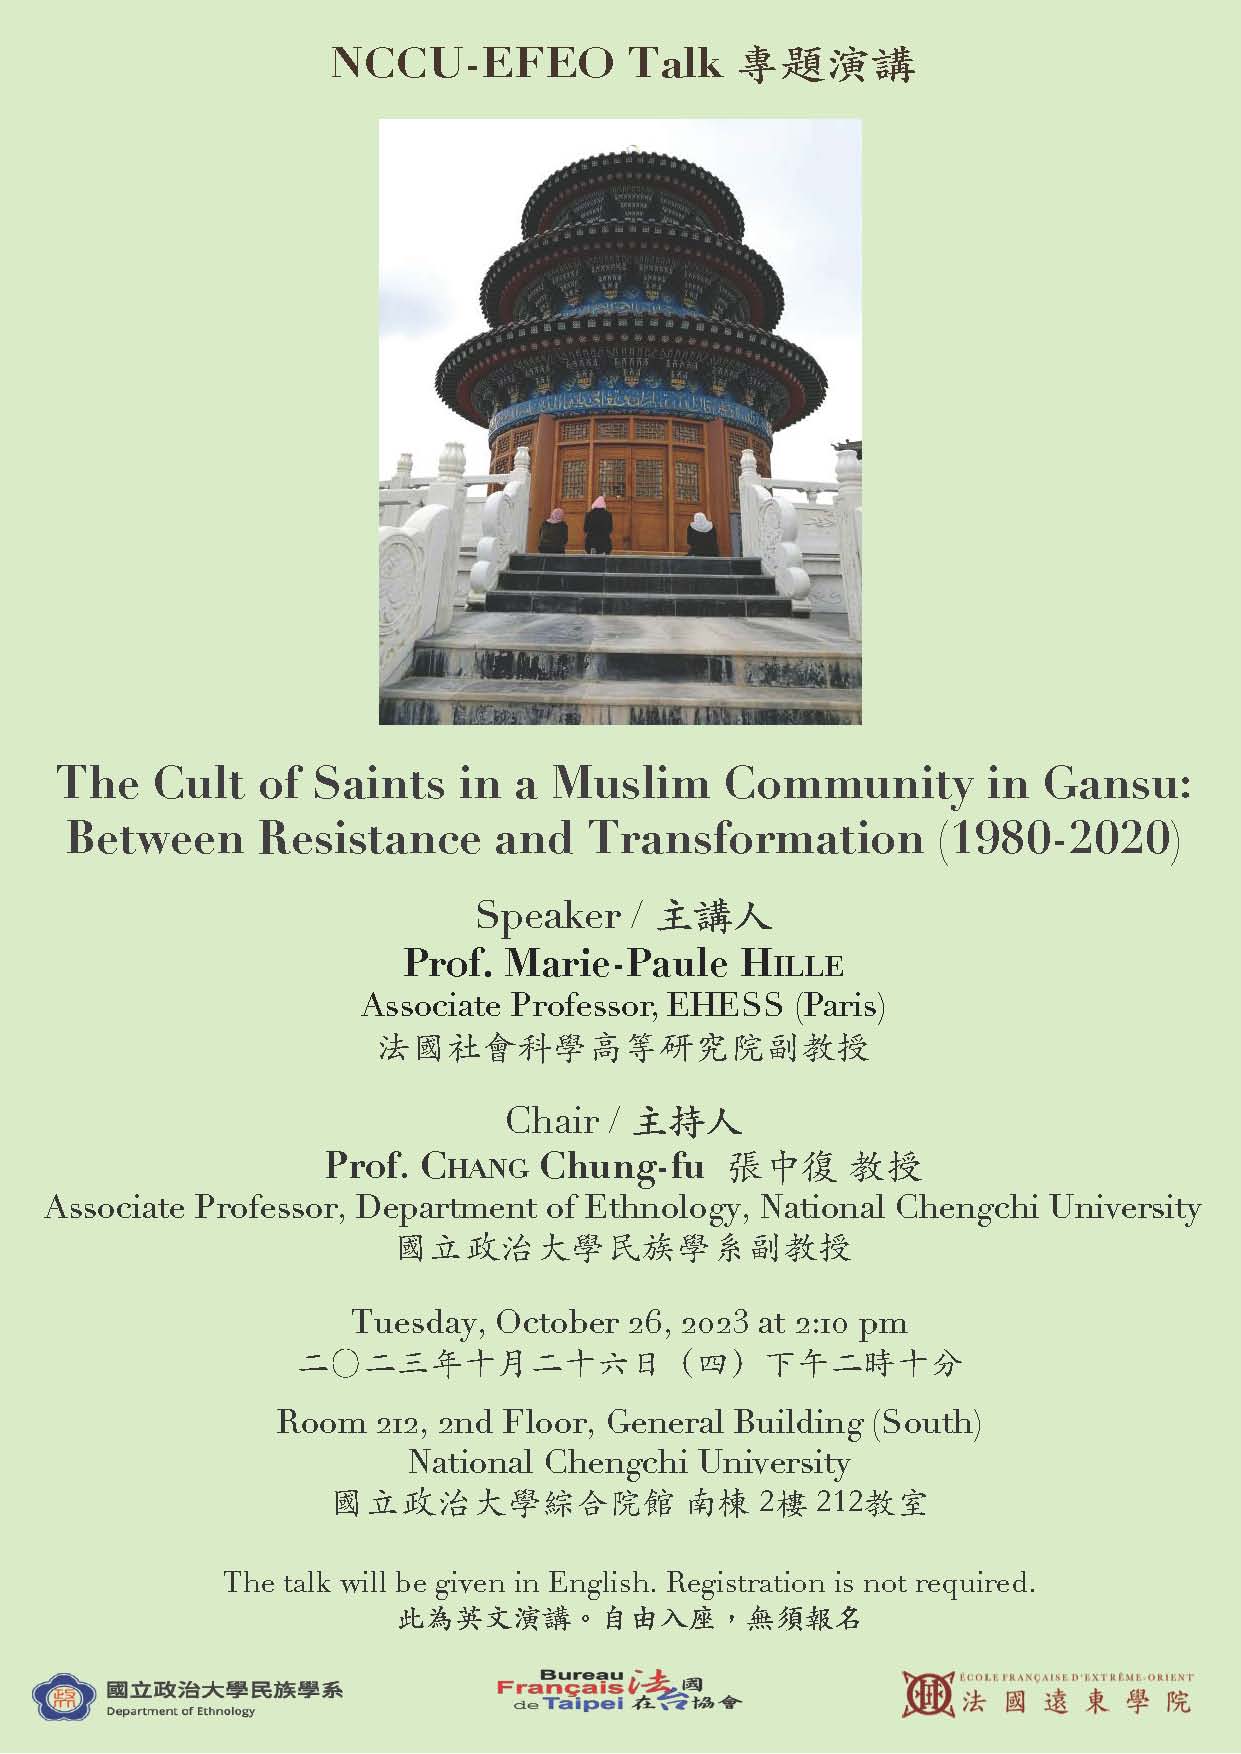 NCCU-EFEO Talk 專題演講:The Cult of Saints in a Muslim Community in Gansu: Between Resistance and Transformation (1980-2020)